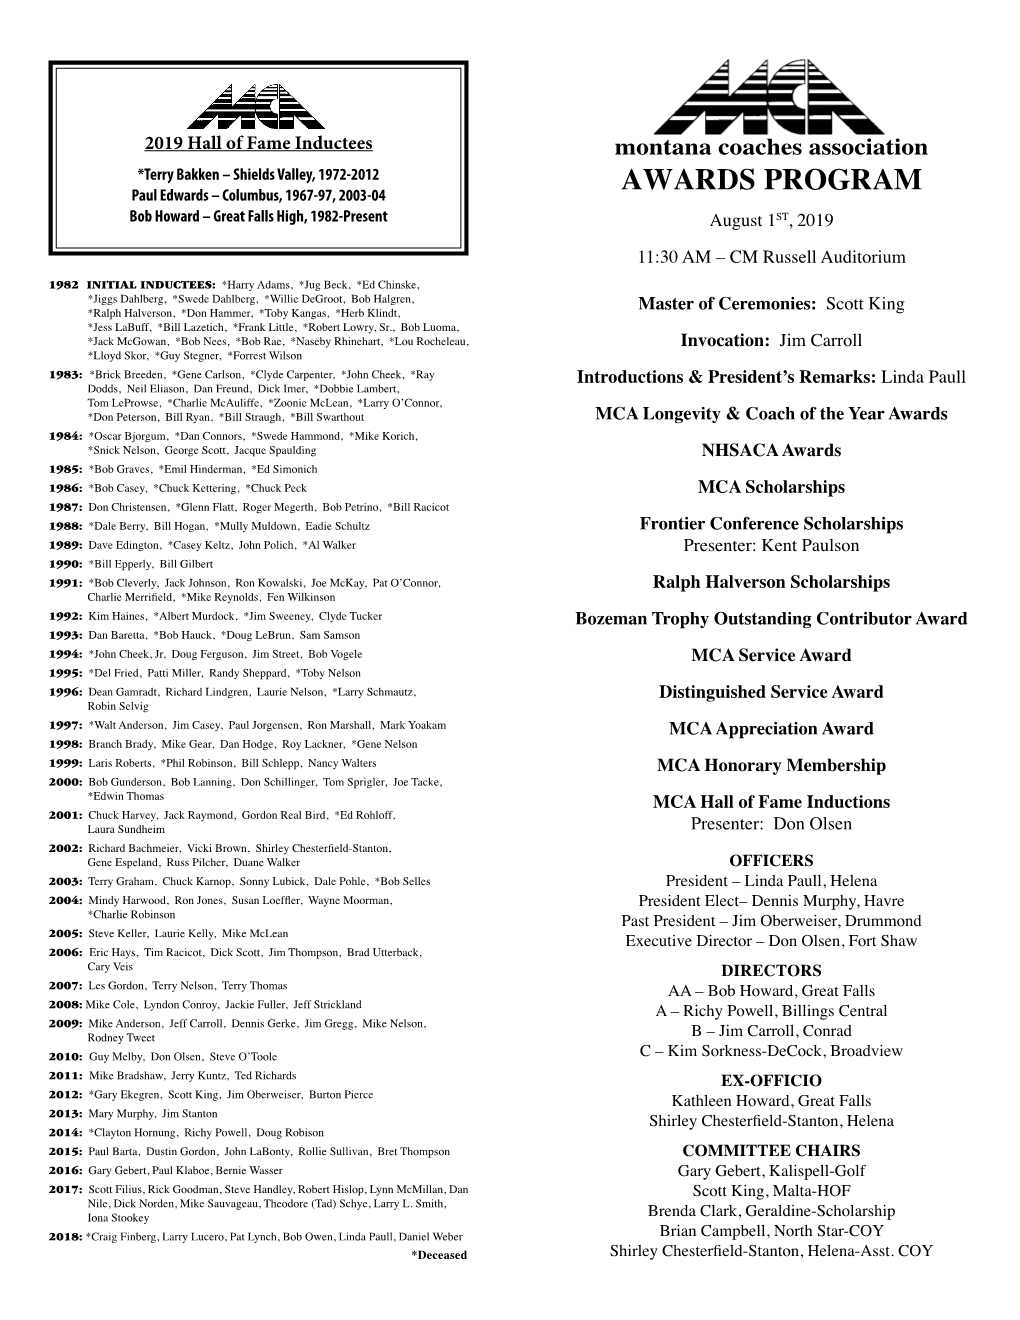 Awards Program